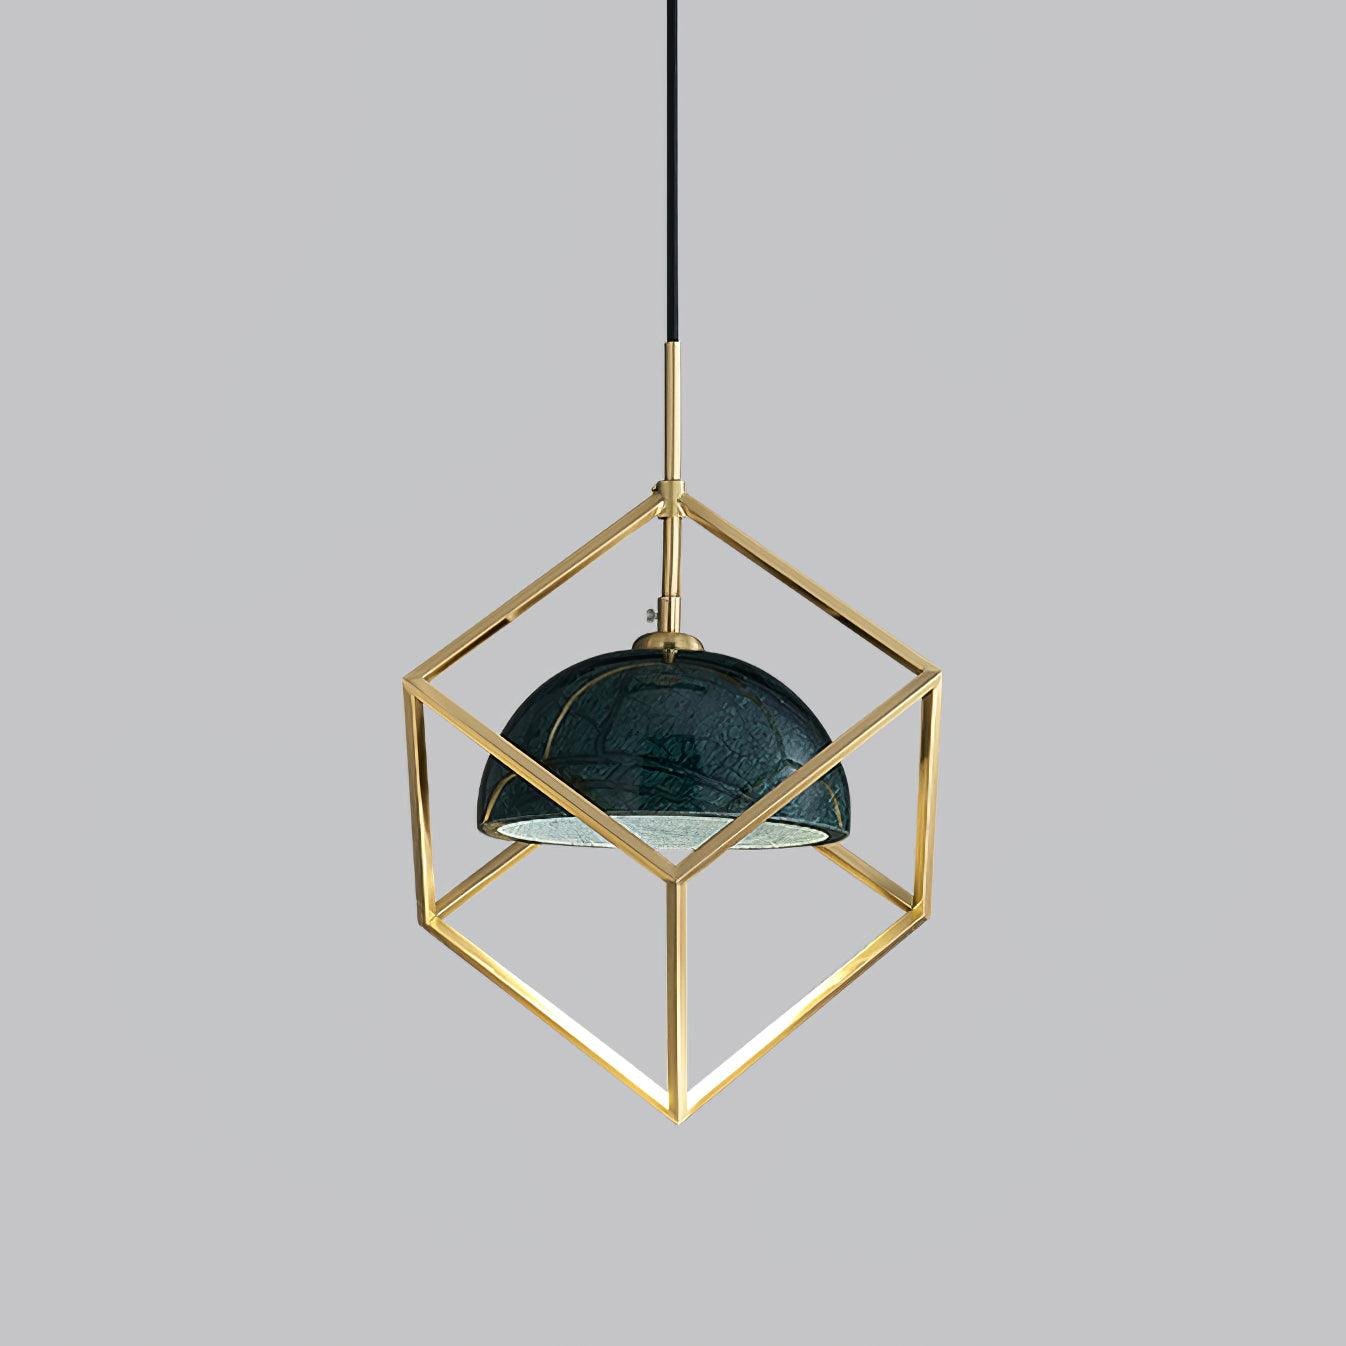 Lantern Square Pendant Lamp Model D ∅ 7.8″ x H 7.8″ , Dia 20cm x H 20cm , Polished Brass+Green Marble